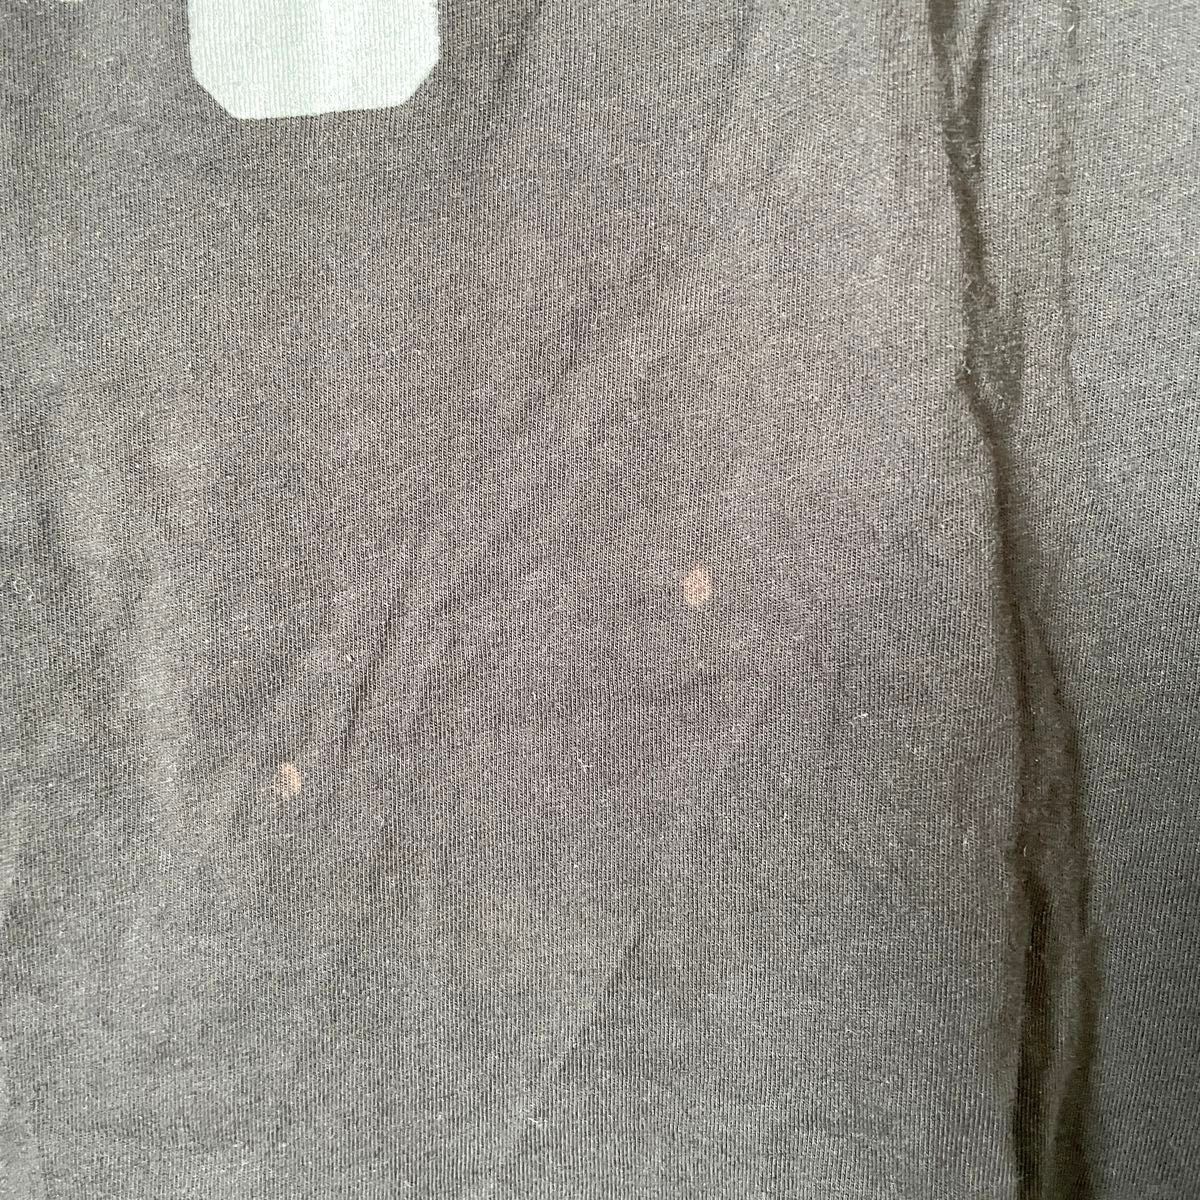 【DIESEL】 ディーゼル Tシャツ TEE 半袖 クルーネック 夏服 プリント メンズ 匿名配送 黒 ブラック S